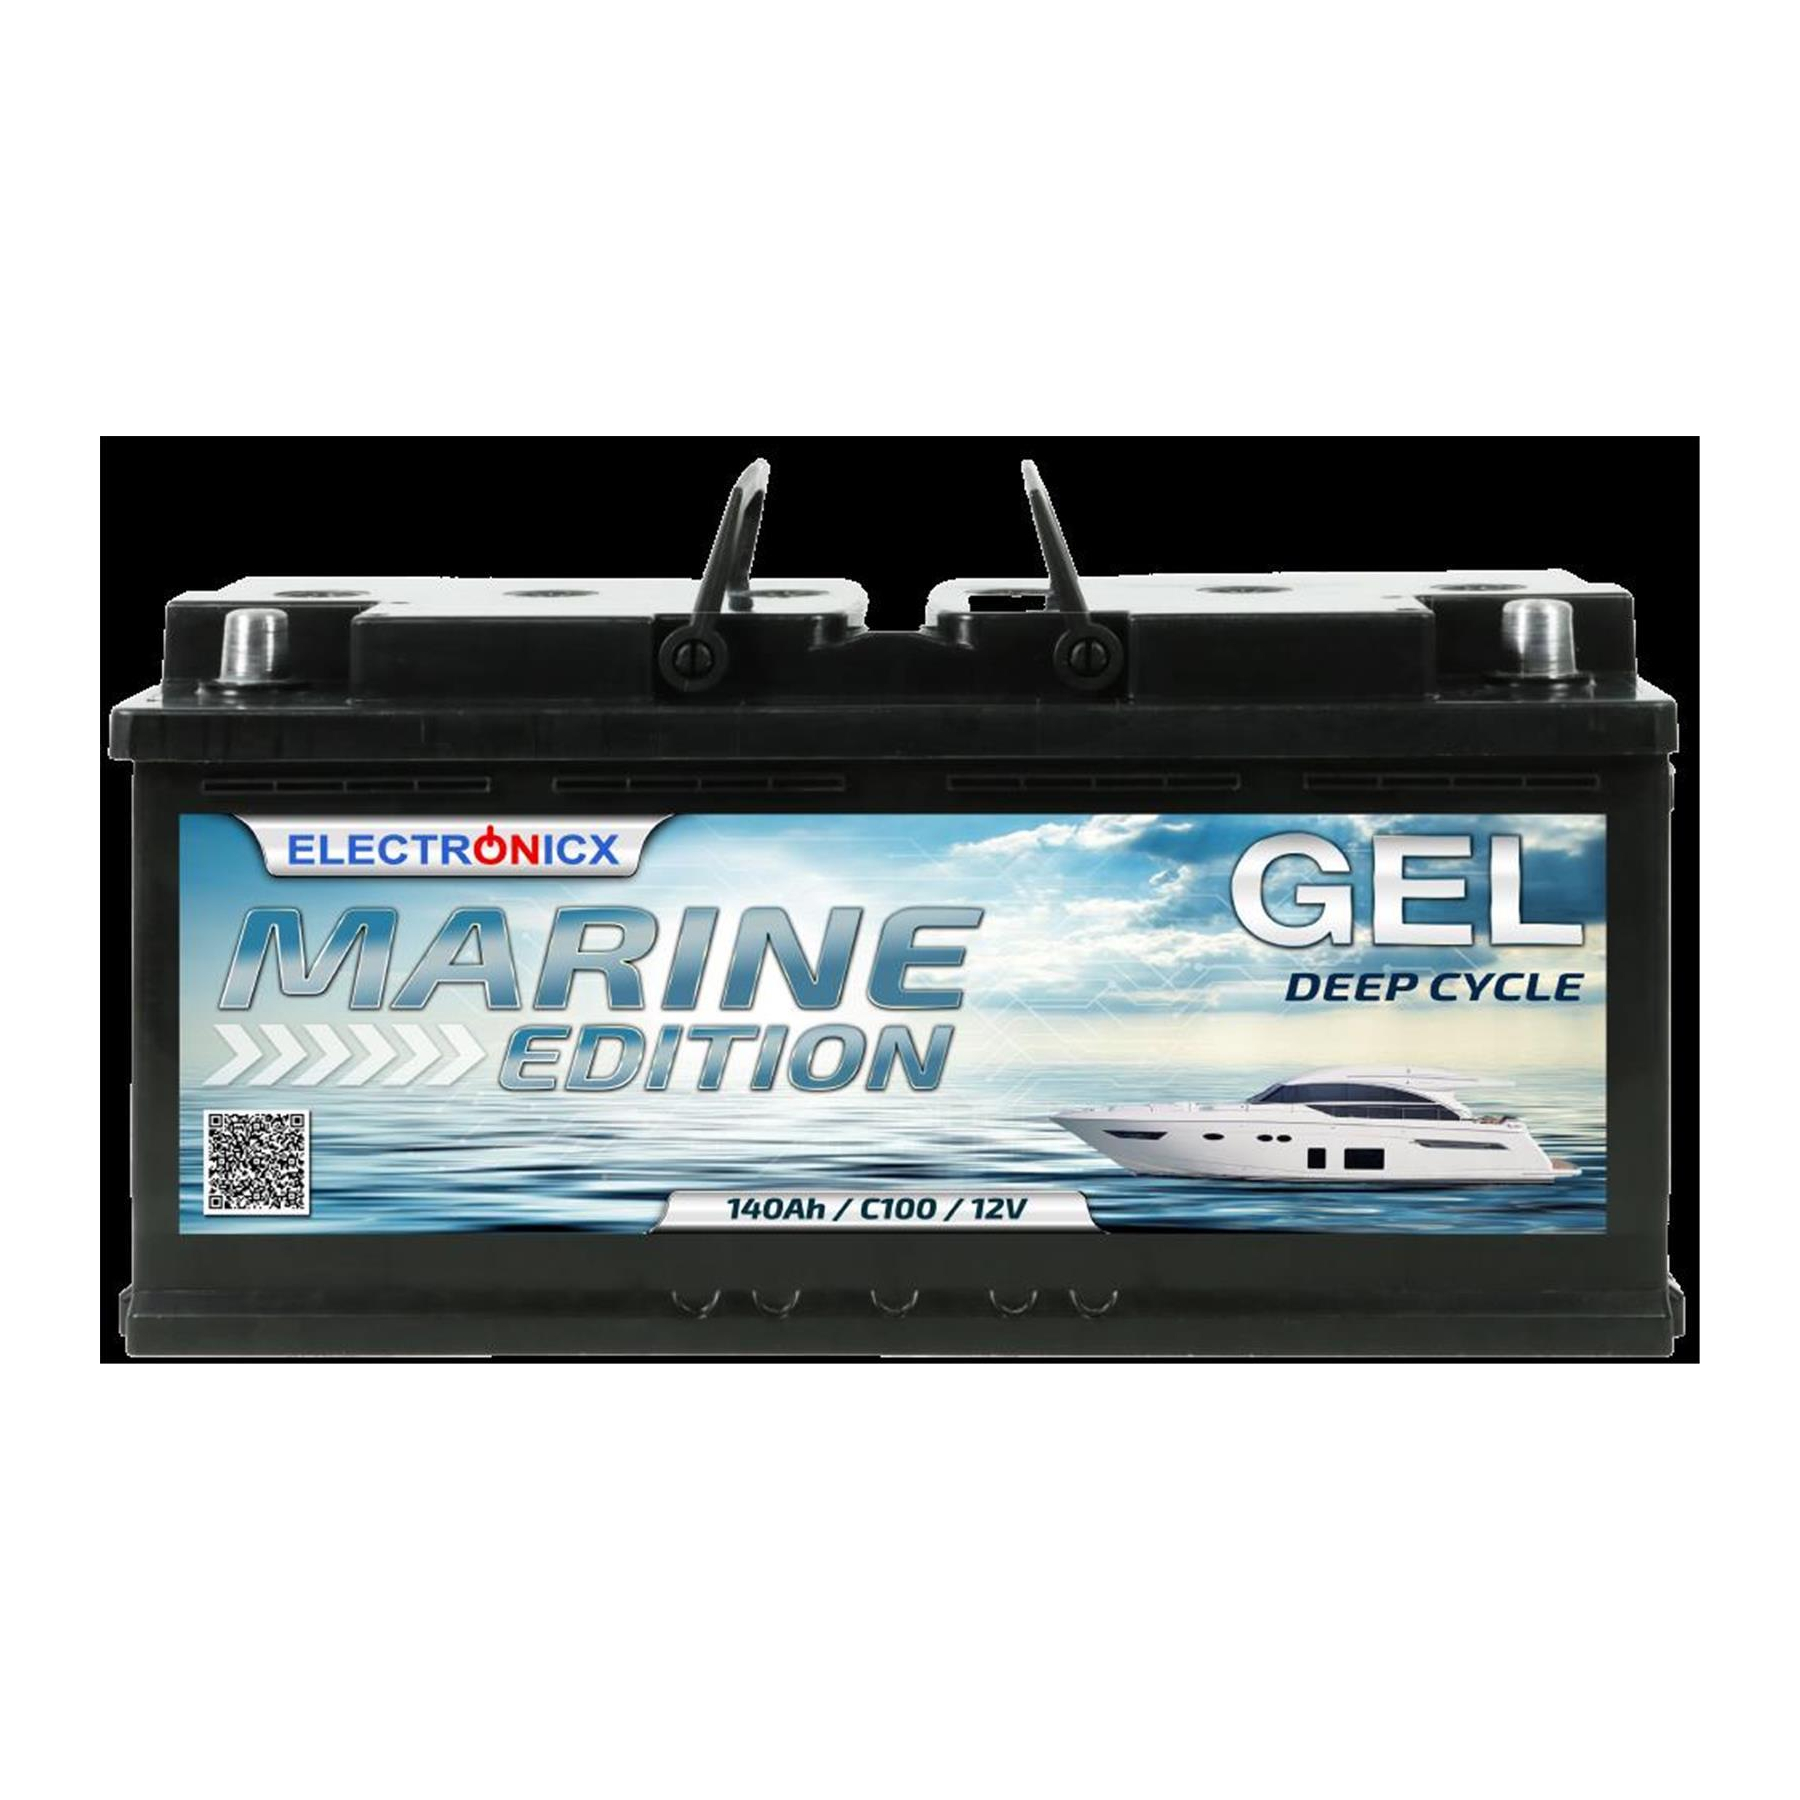 GEL Batterie 110AH Electronicx Marine Edition 12V, 154,99 €